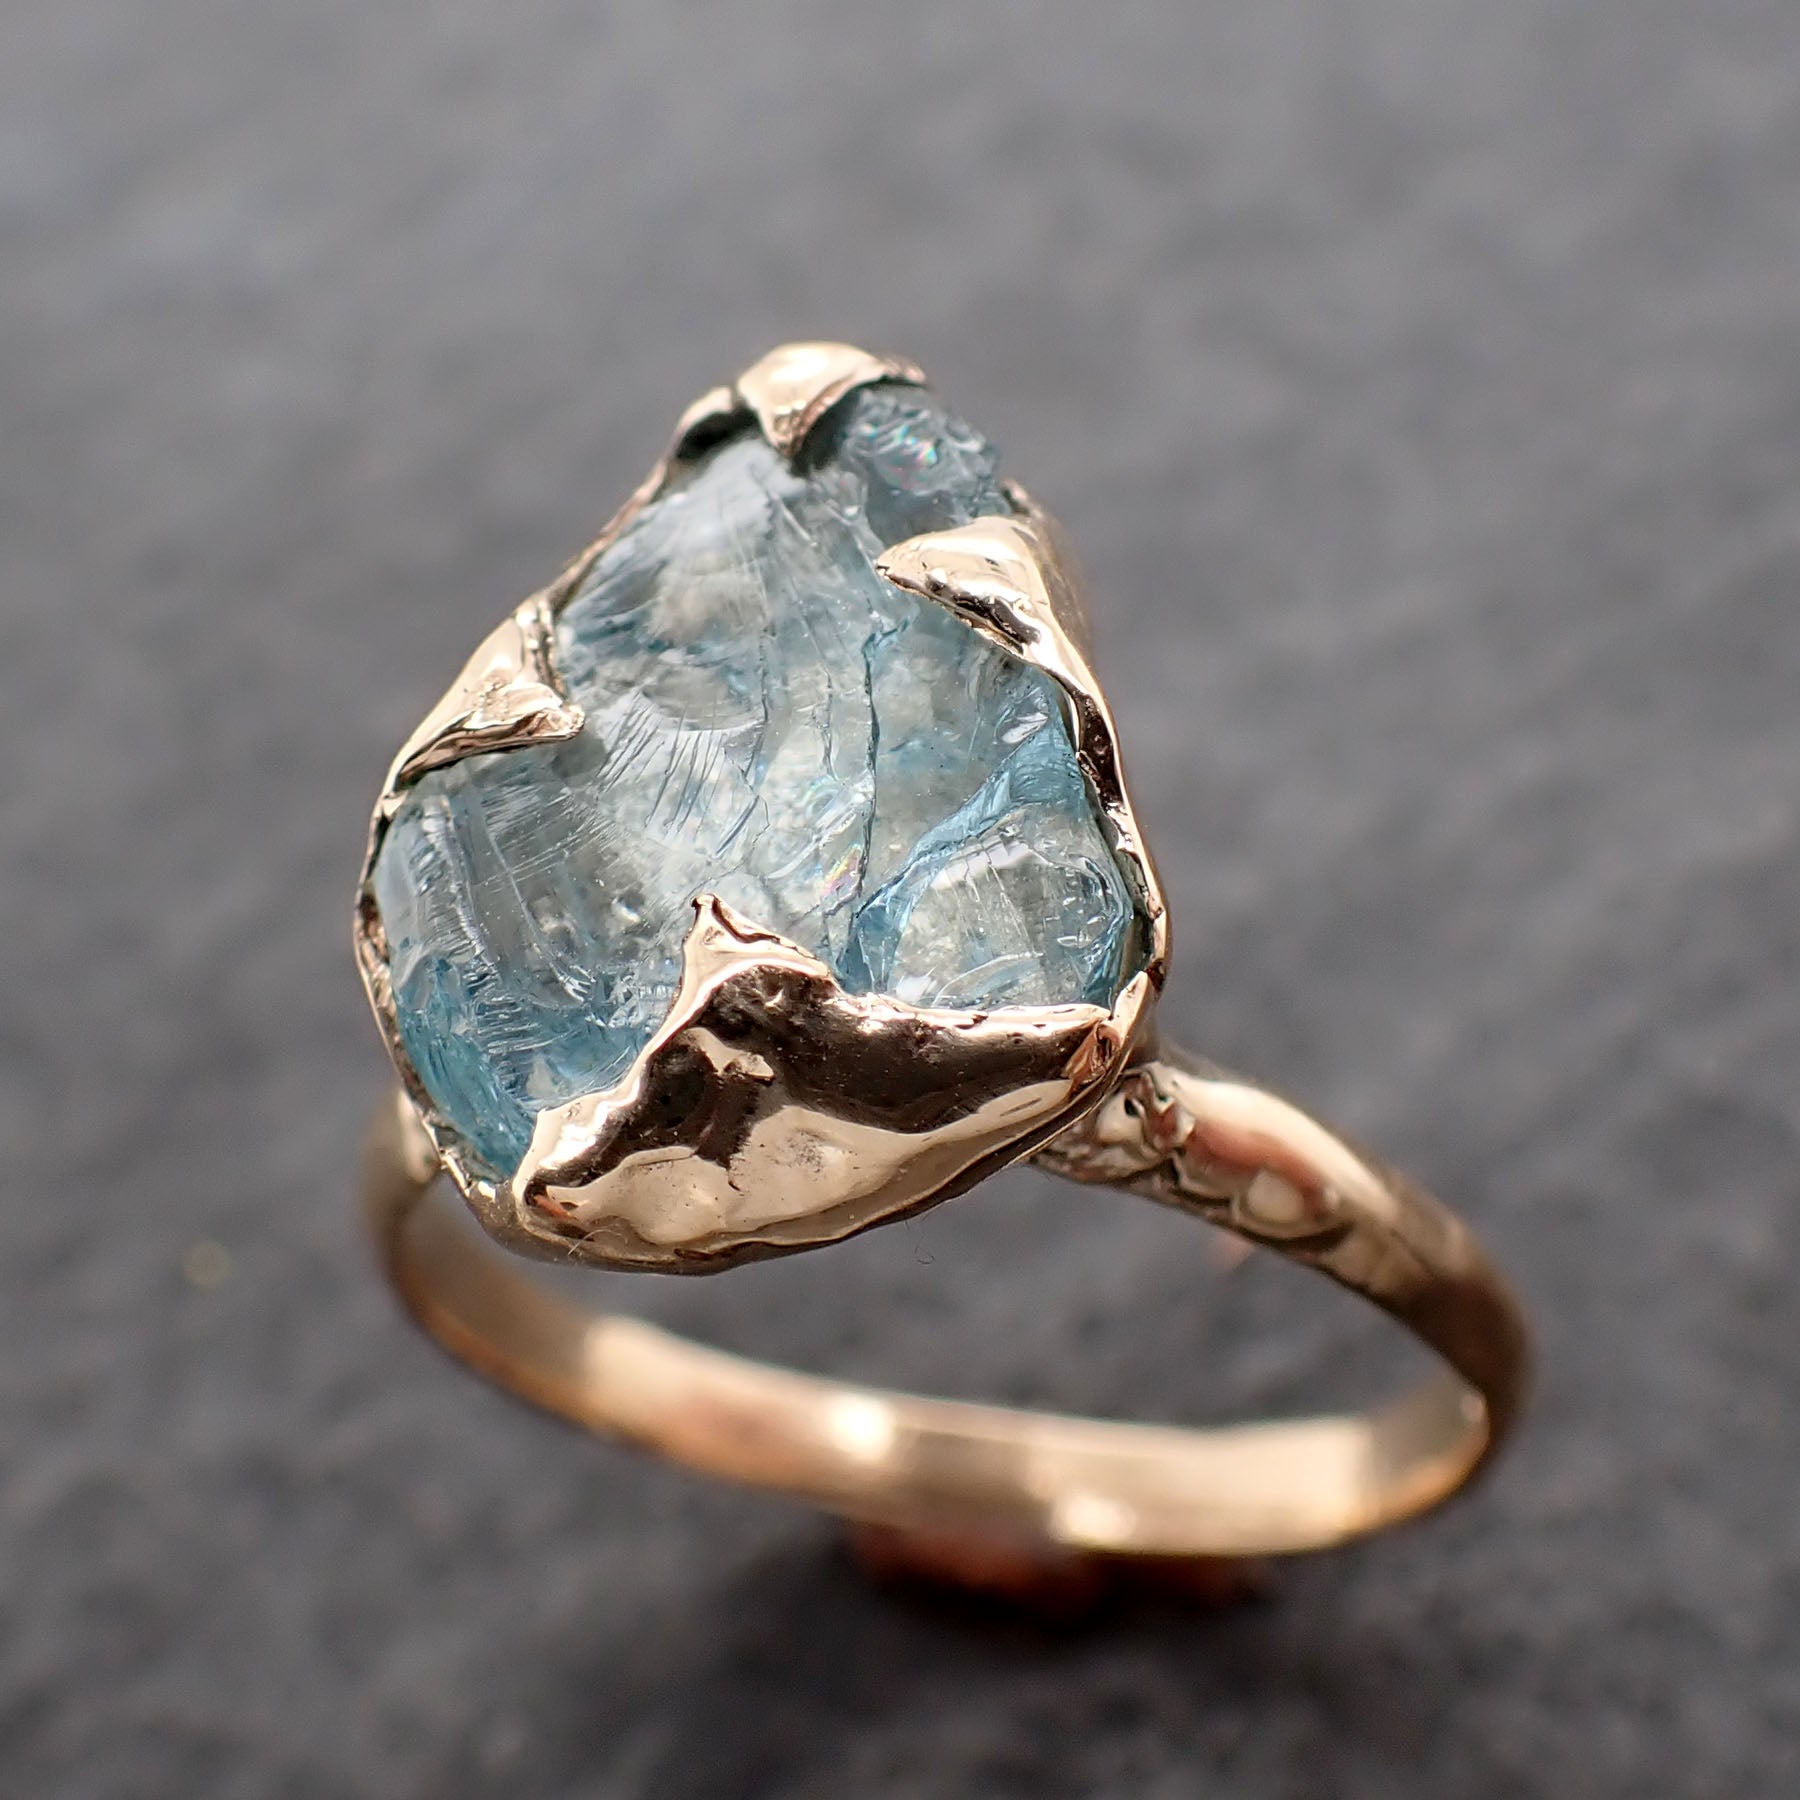 Raw uncut Aquamarine Solitaire Ring Custom One Of a Kind Gemstone Ring Bespoke byAngeline 2543